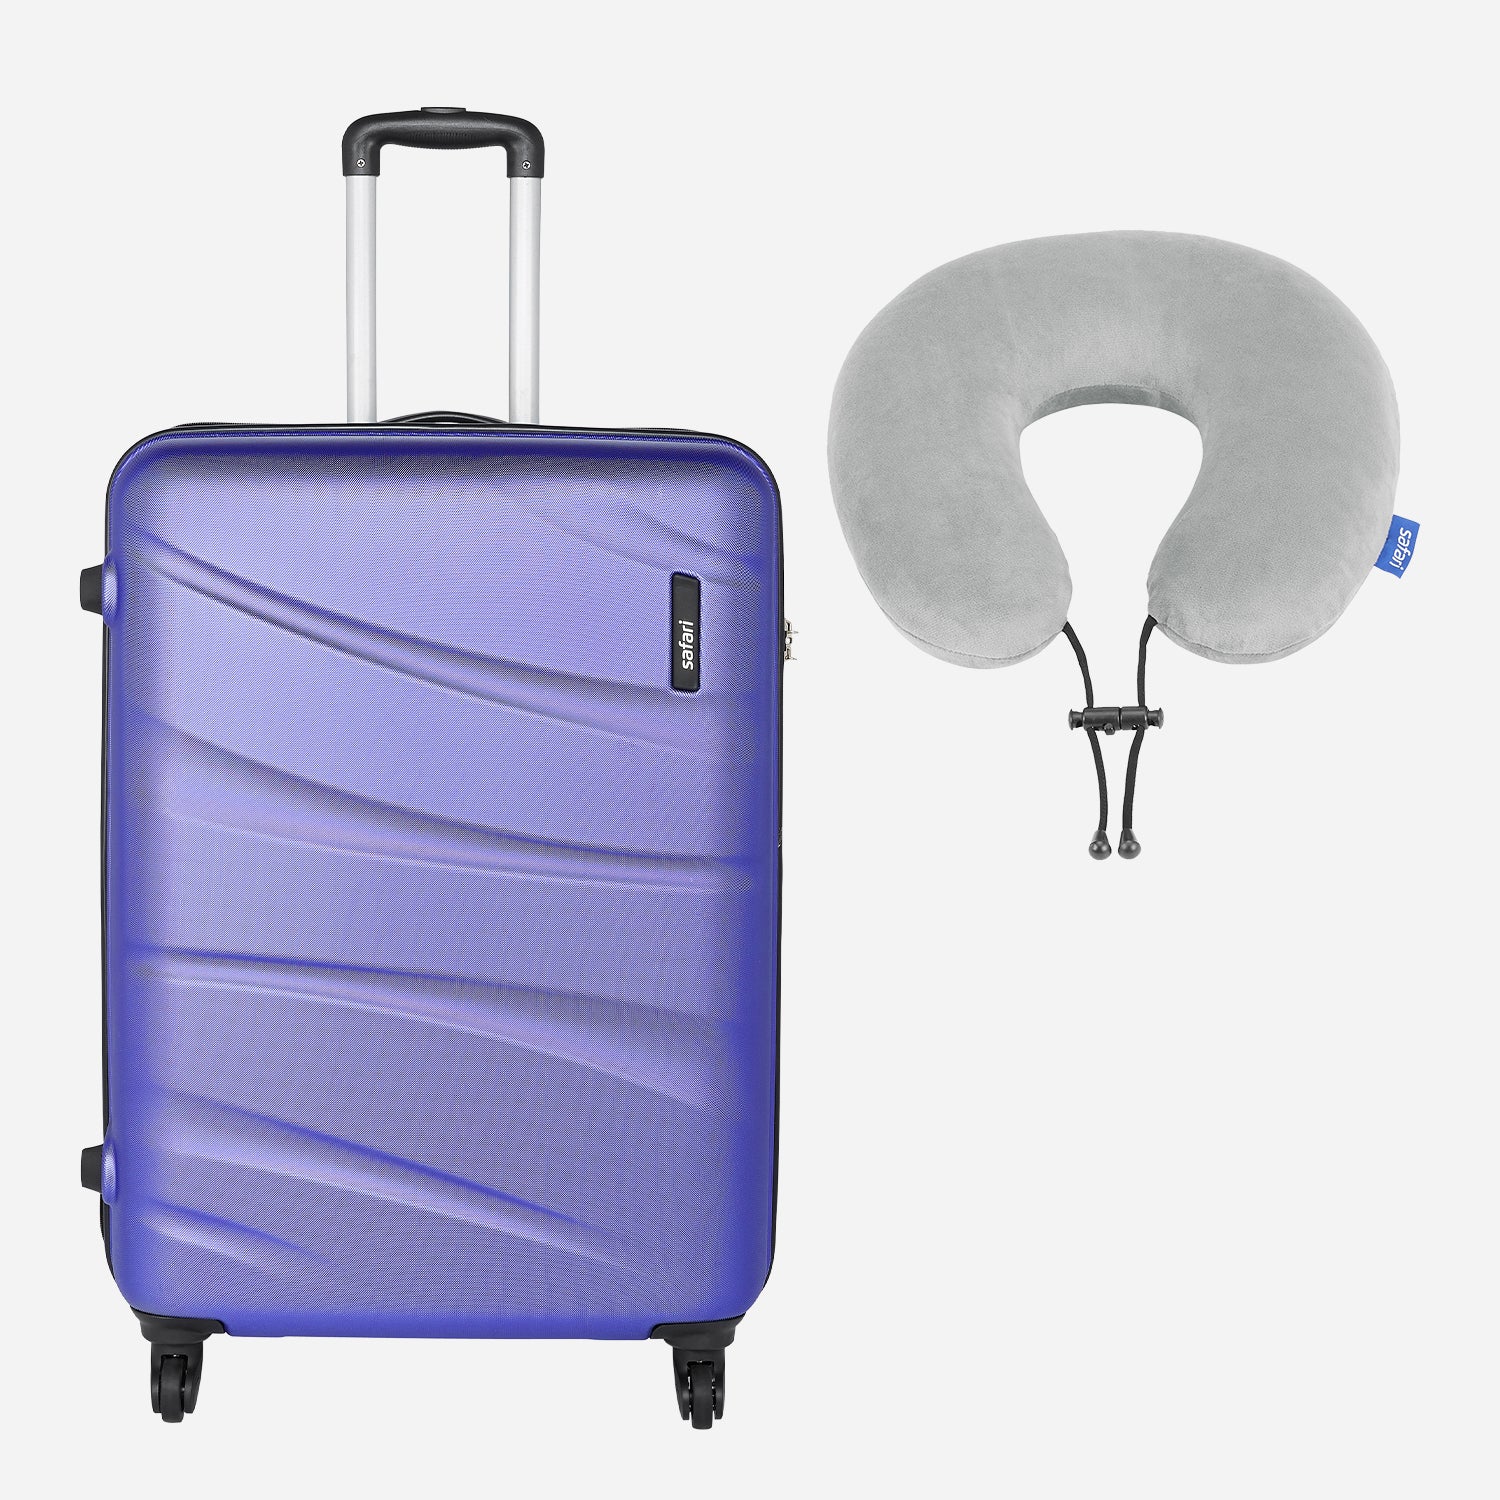 Flo Secure Hard Luggage and Basic Neck Pillow Combo